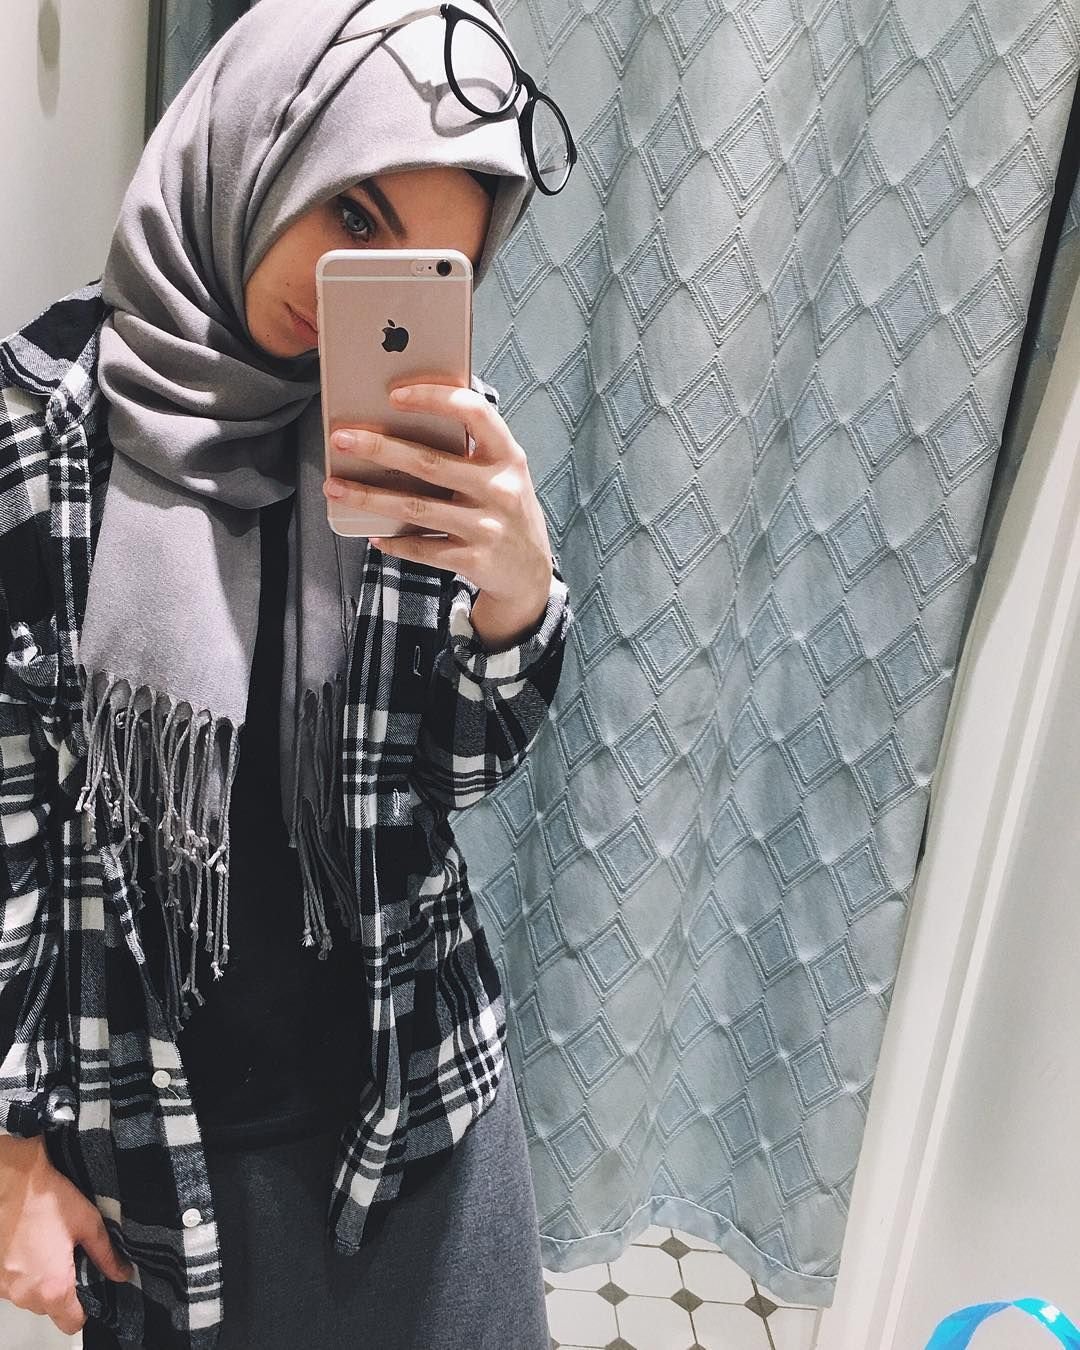 Фото на аву девушки в хиджабе без лица на аву